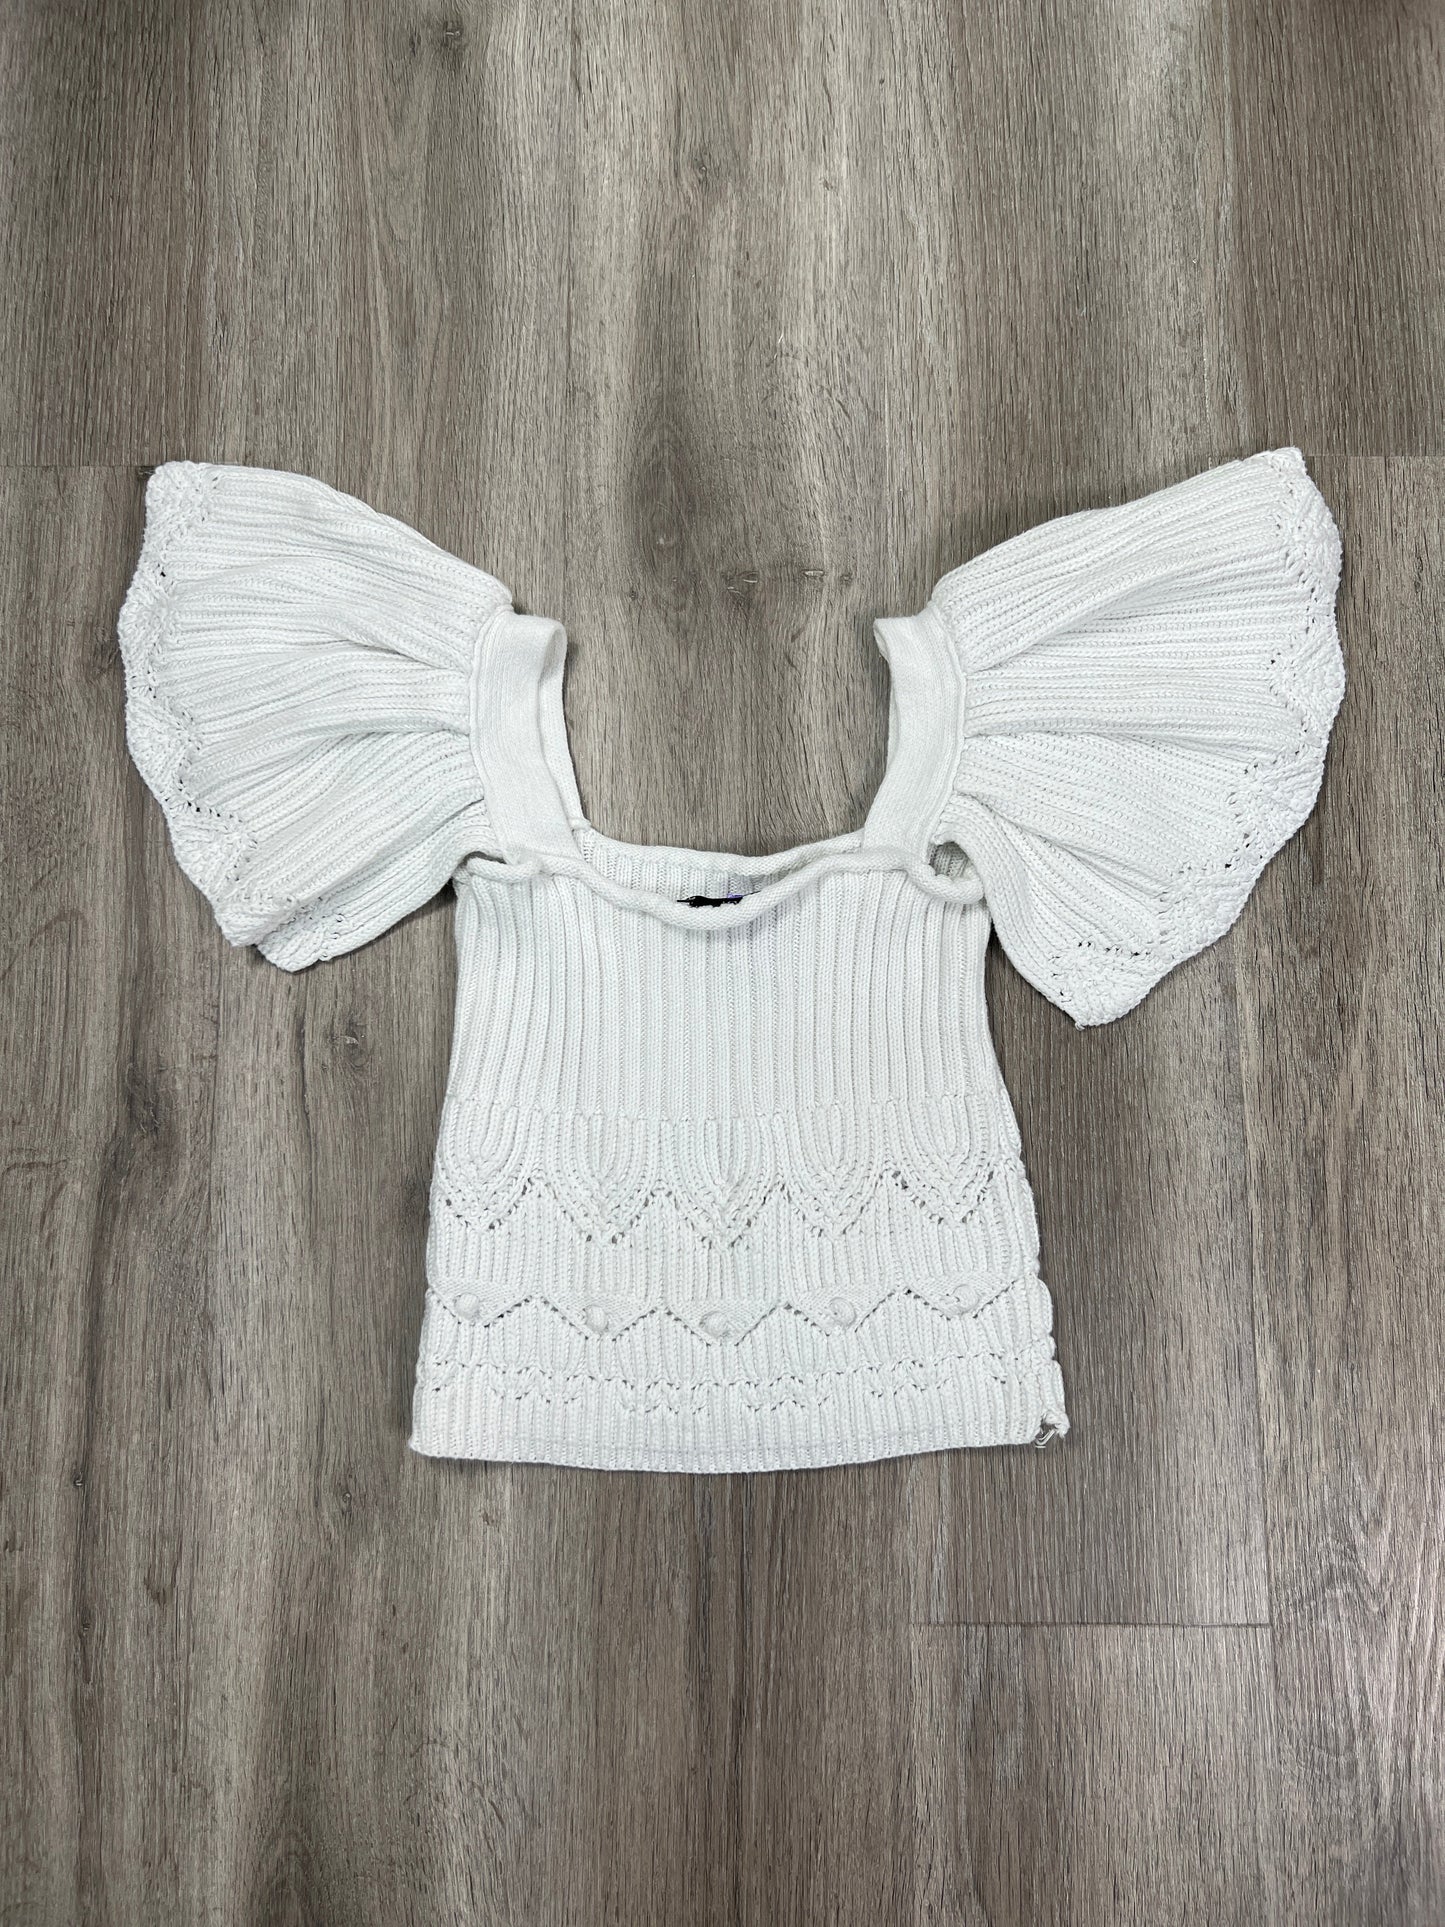 Blouse Short Sleeve By Zara  Size: S